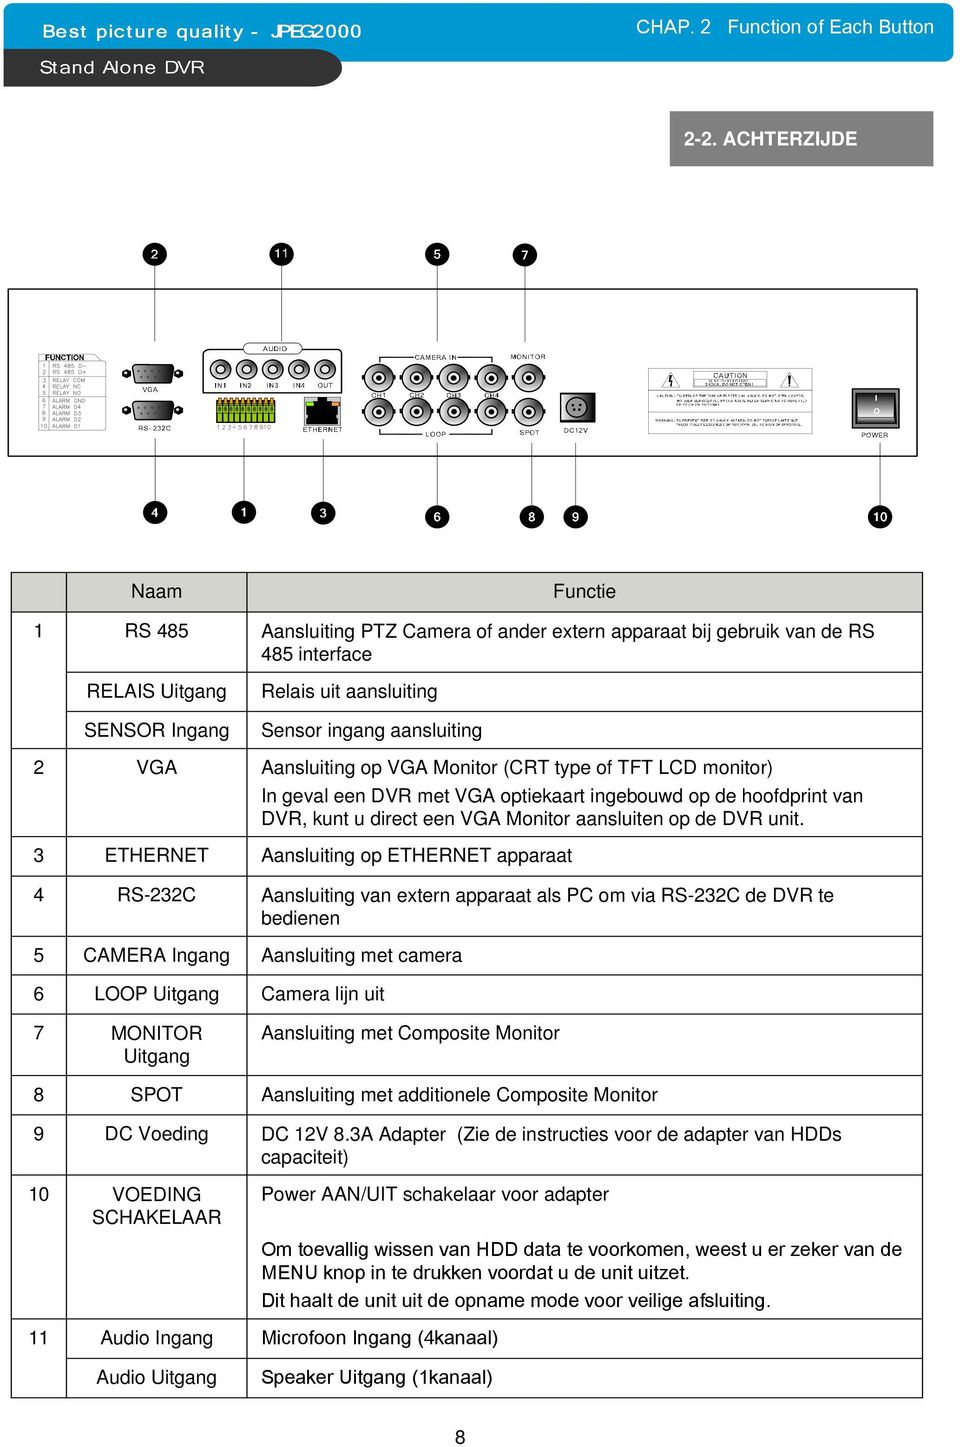 Uitgang Aansluiting PTZ Camera of ander extern apparaat bij gebruik van de RS 485 interface Relais uit aansluiting Sensor ingang aansluiting Aansluiting op VGA Monitor (CRT type of TFT LCD monitor)